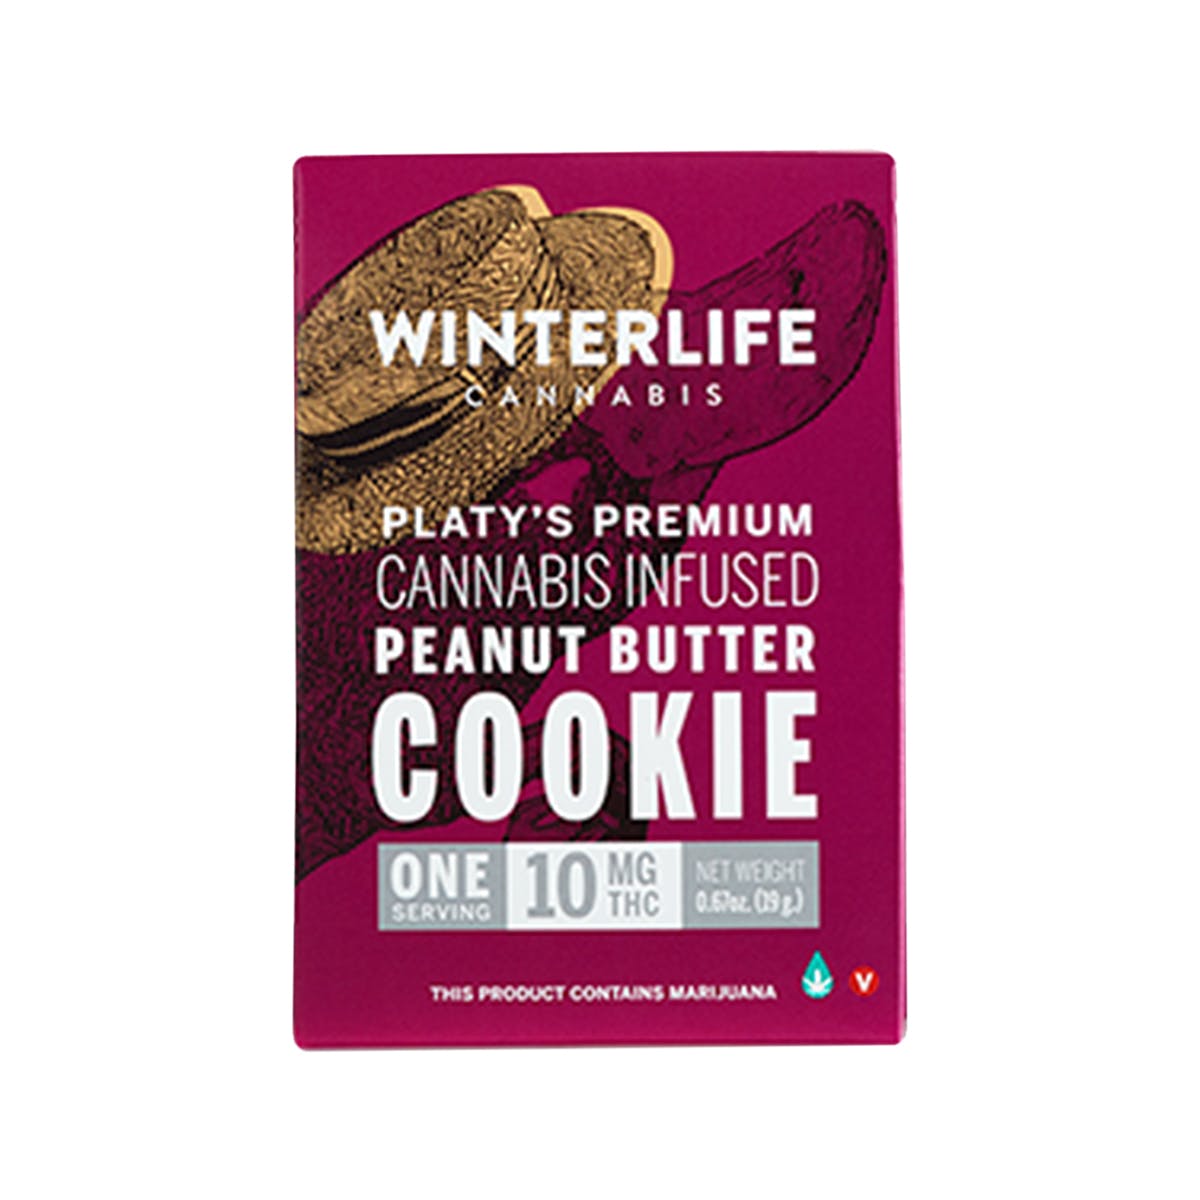 edible-winterlife-cannabis-platys-peanut-butter-cookies-10-mg